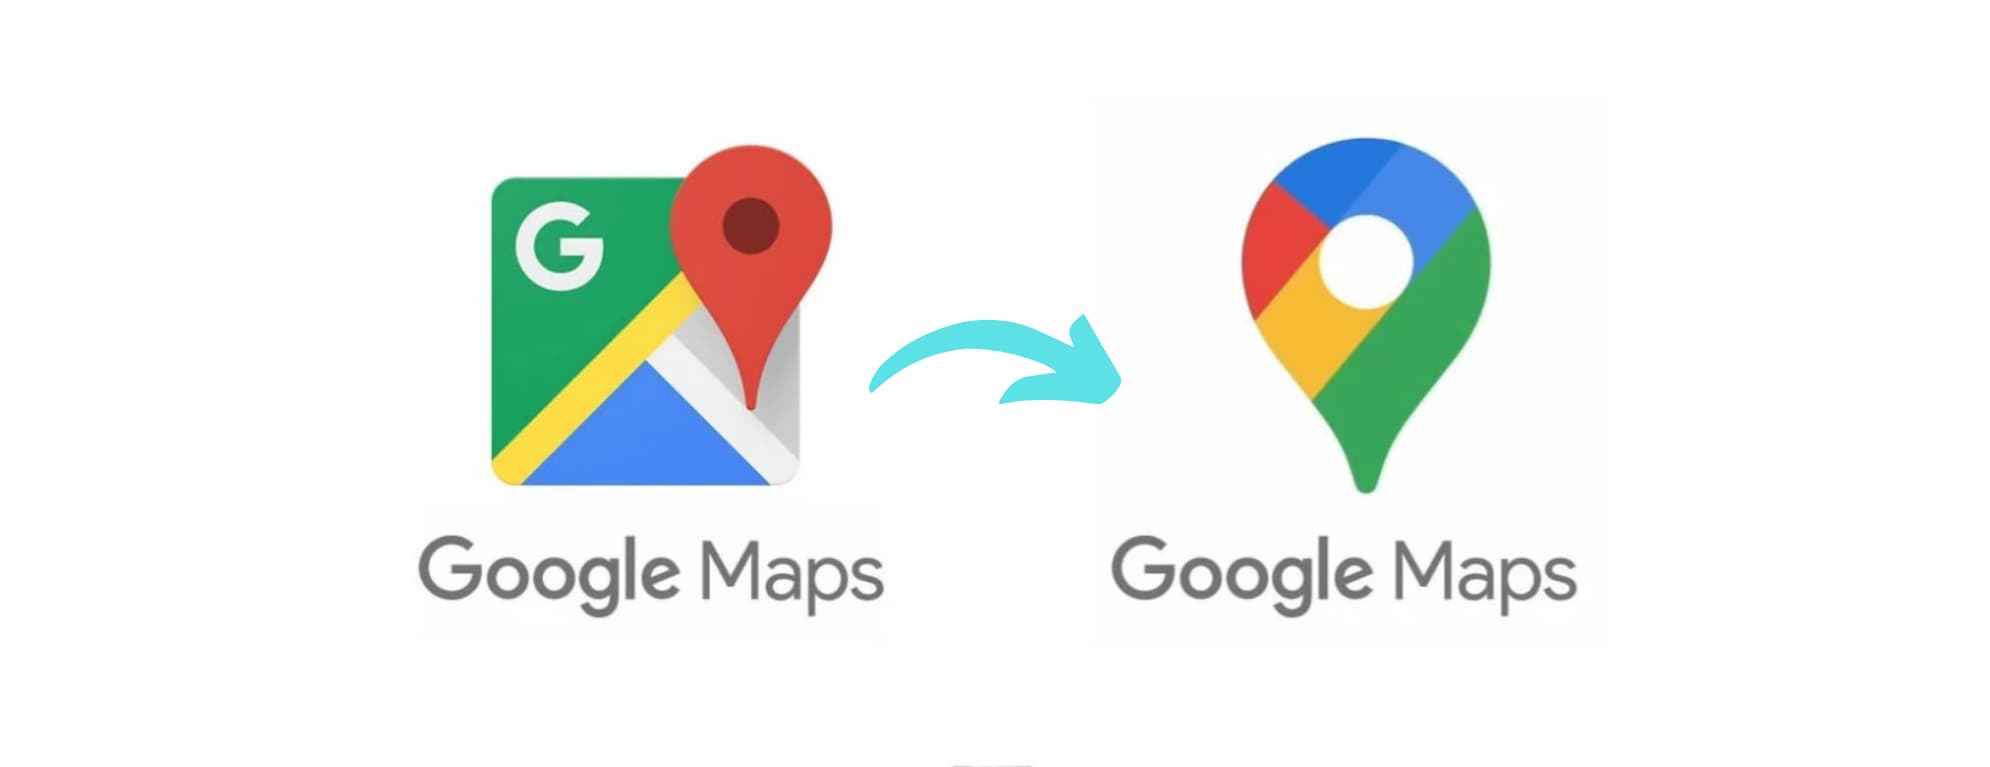 cambios-google-maps.jpg